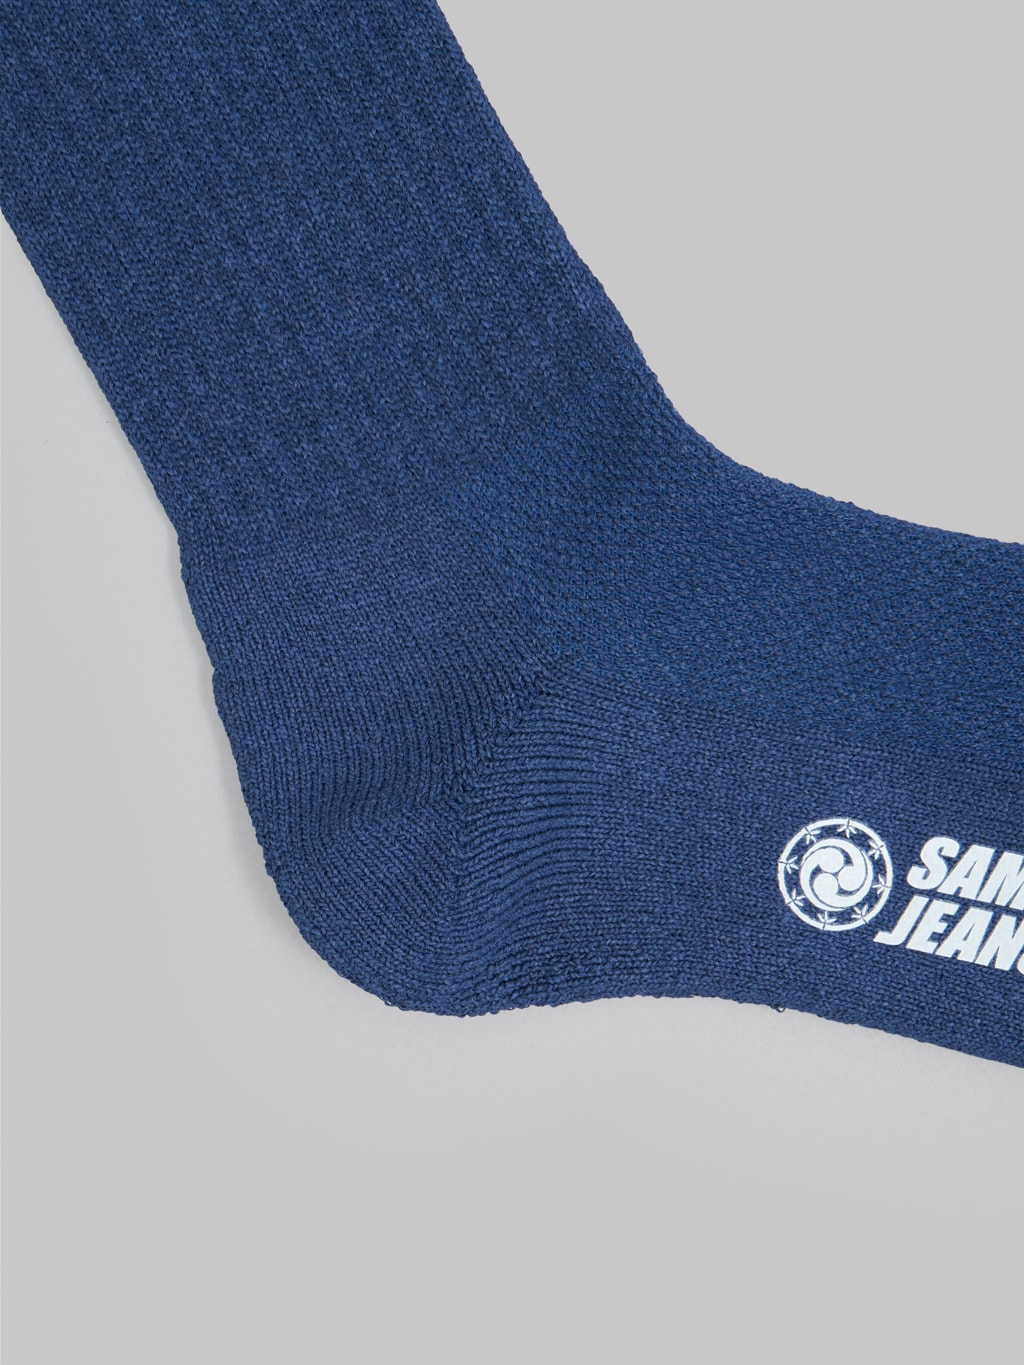 Samurai Jeans SJKS24 Japanese "Washi Paper" Socks Navy